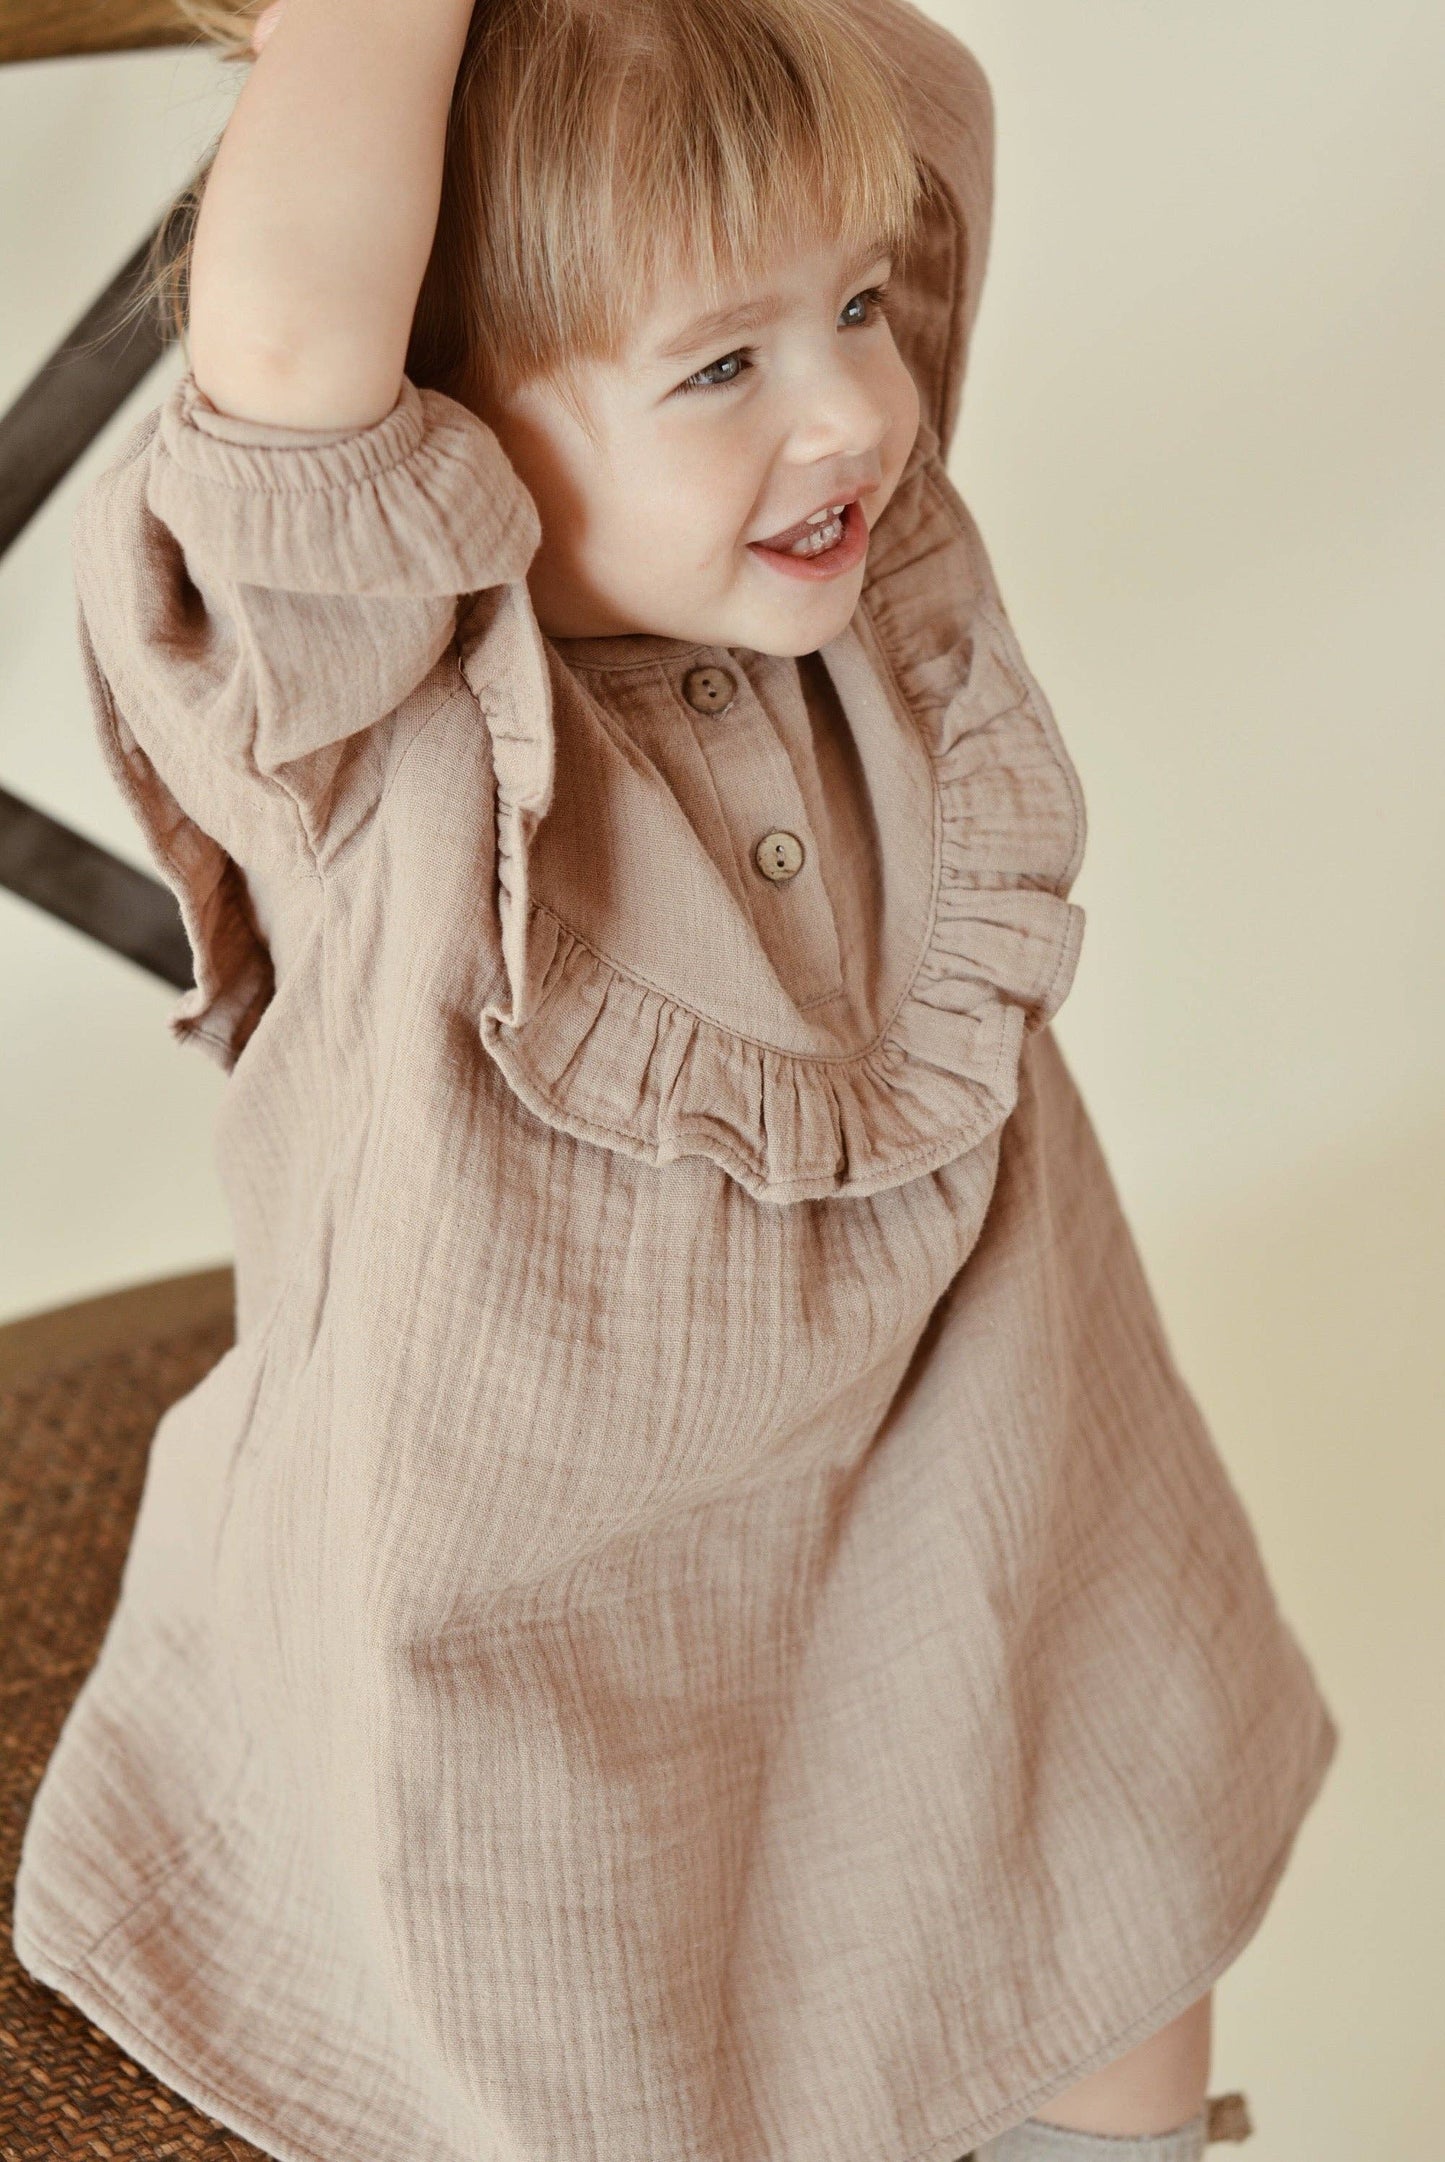 Eli & Nev - Baby / Kids Girl Muslin Long-Sleeves Dress 100% Cotton